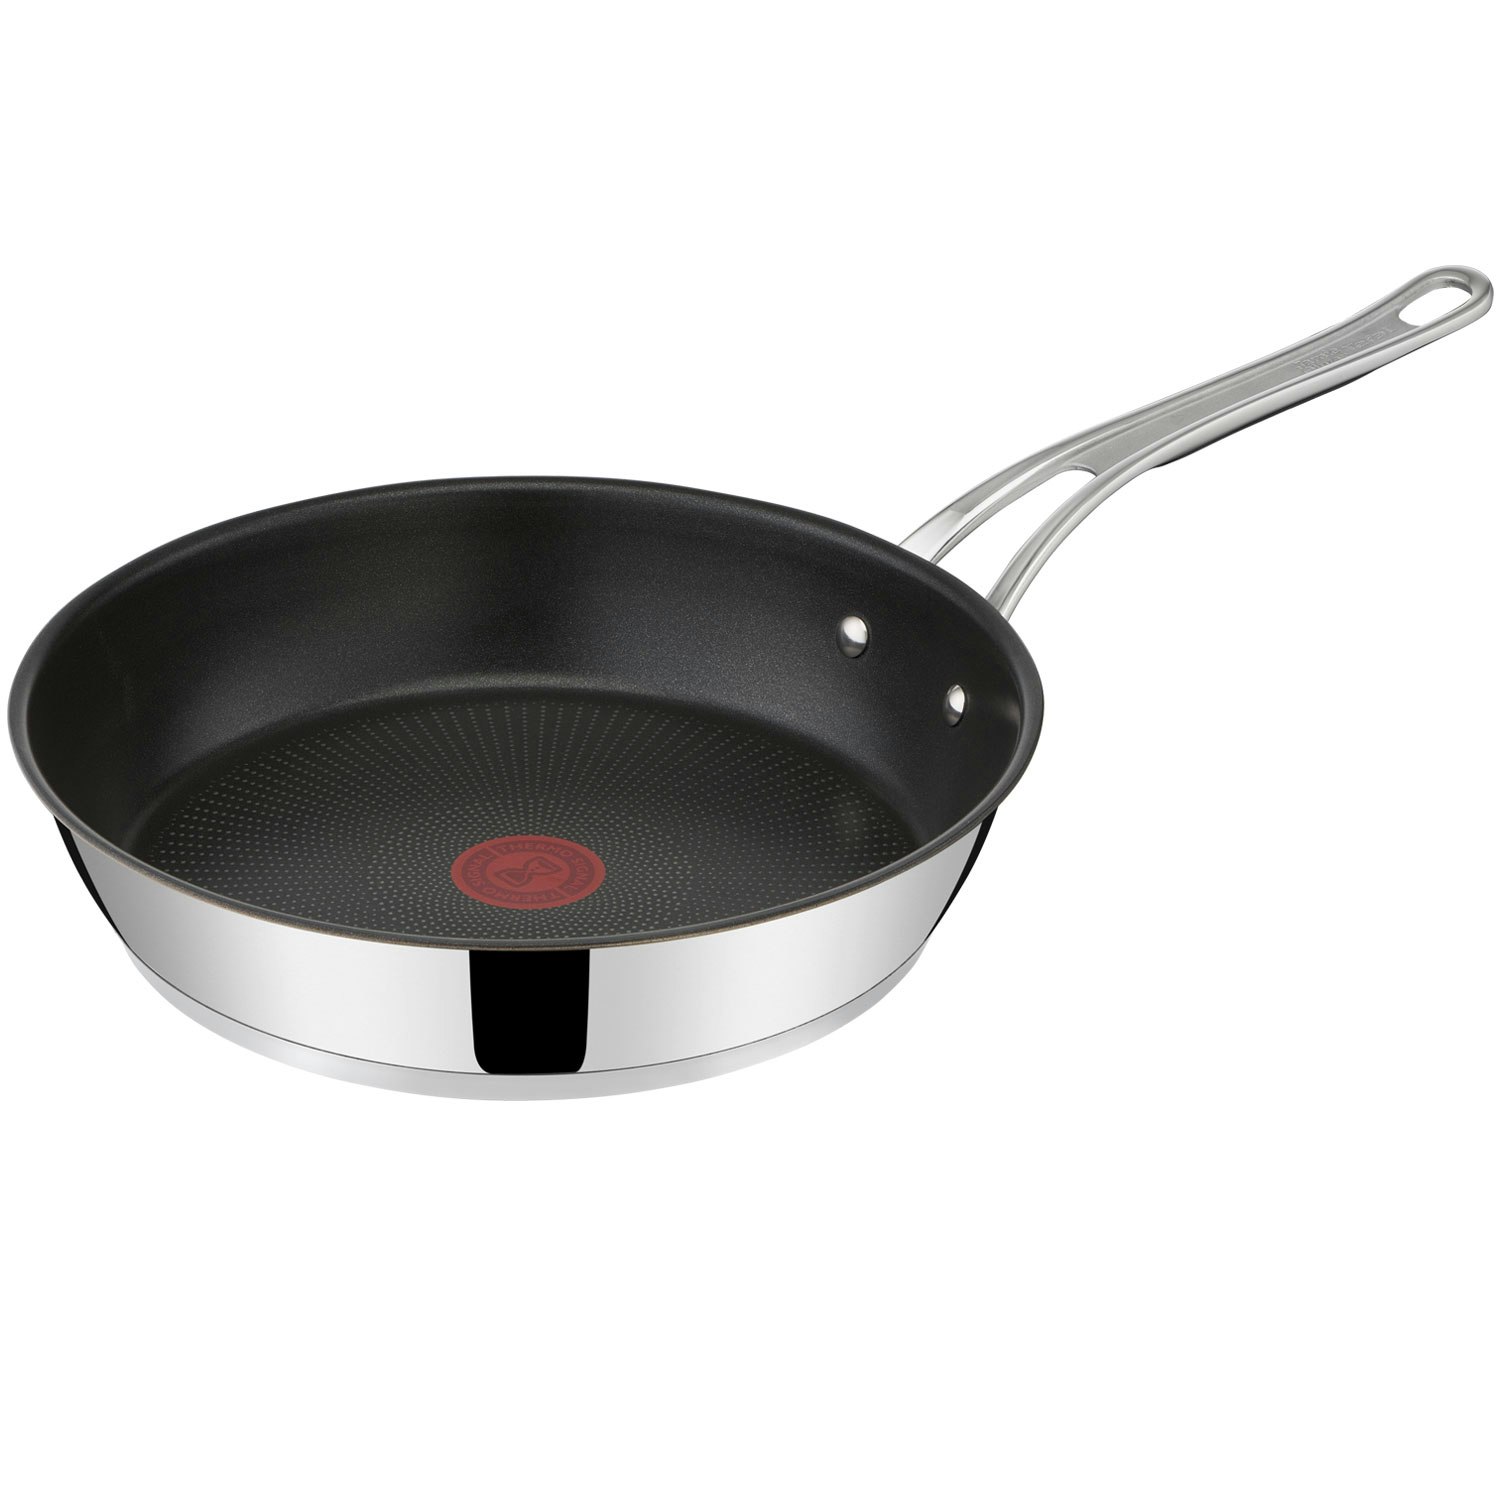 Kracht spuiten Accountant Jamie Oliver Cook's Classic Frying Pan, 20 cm - Tefal @ RoyalDesign